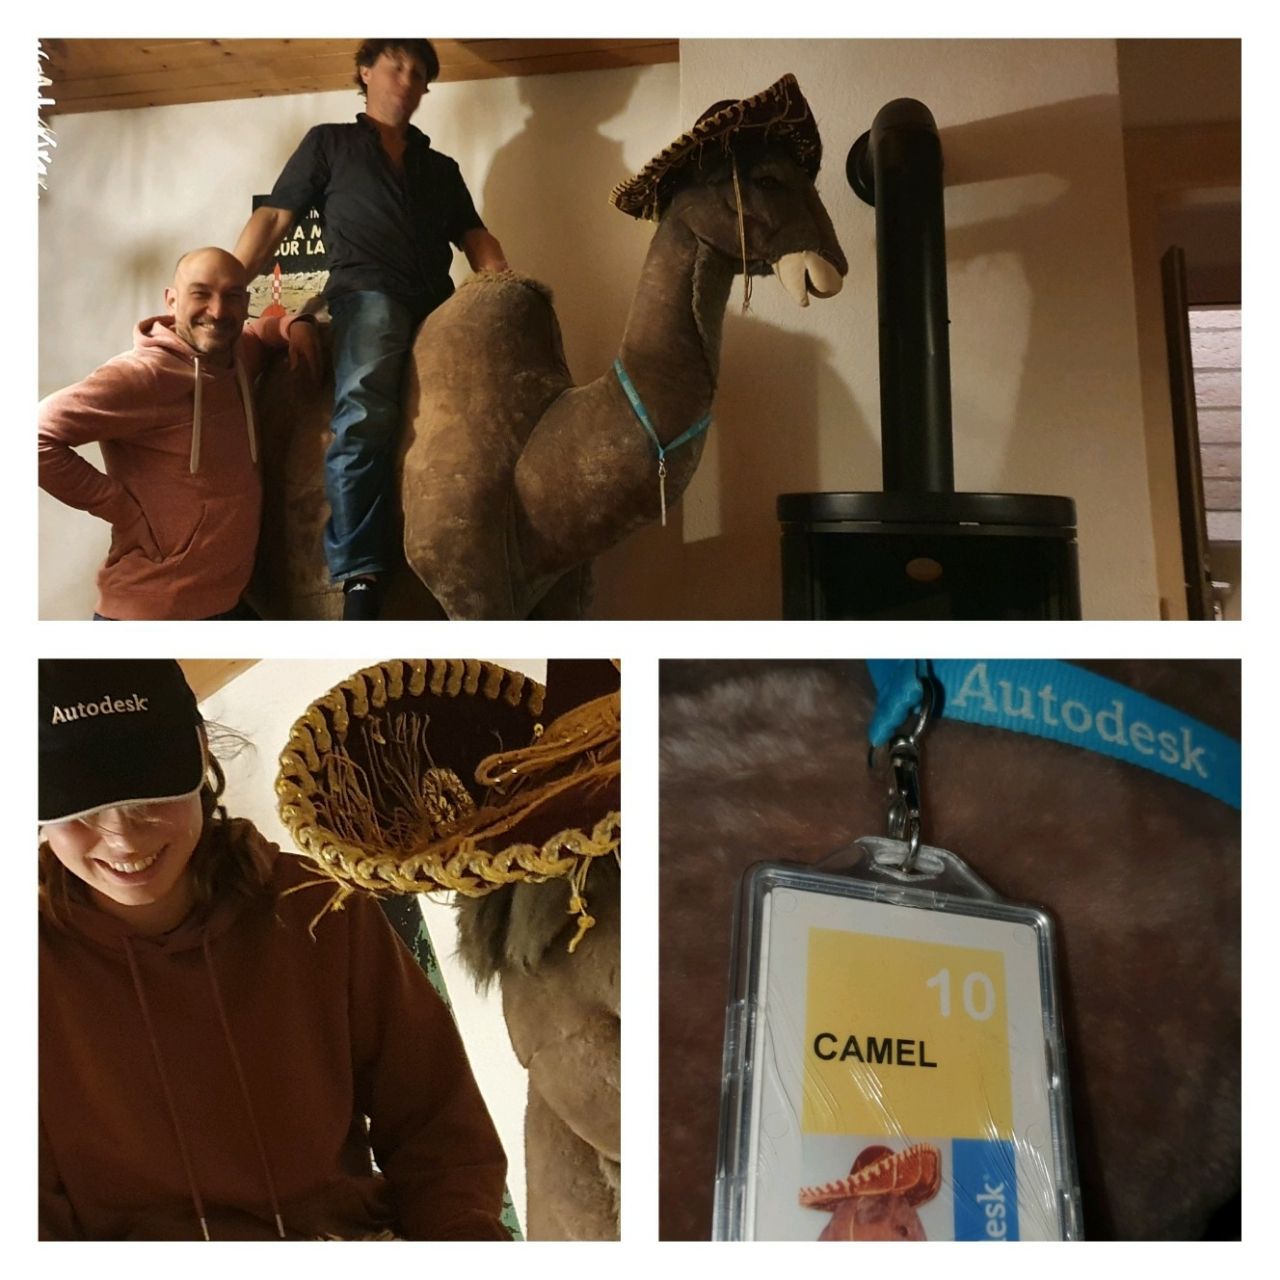 Autodesk Camel